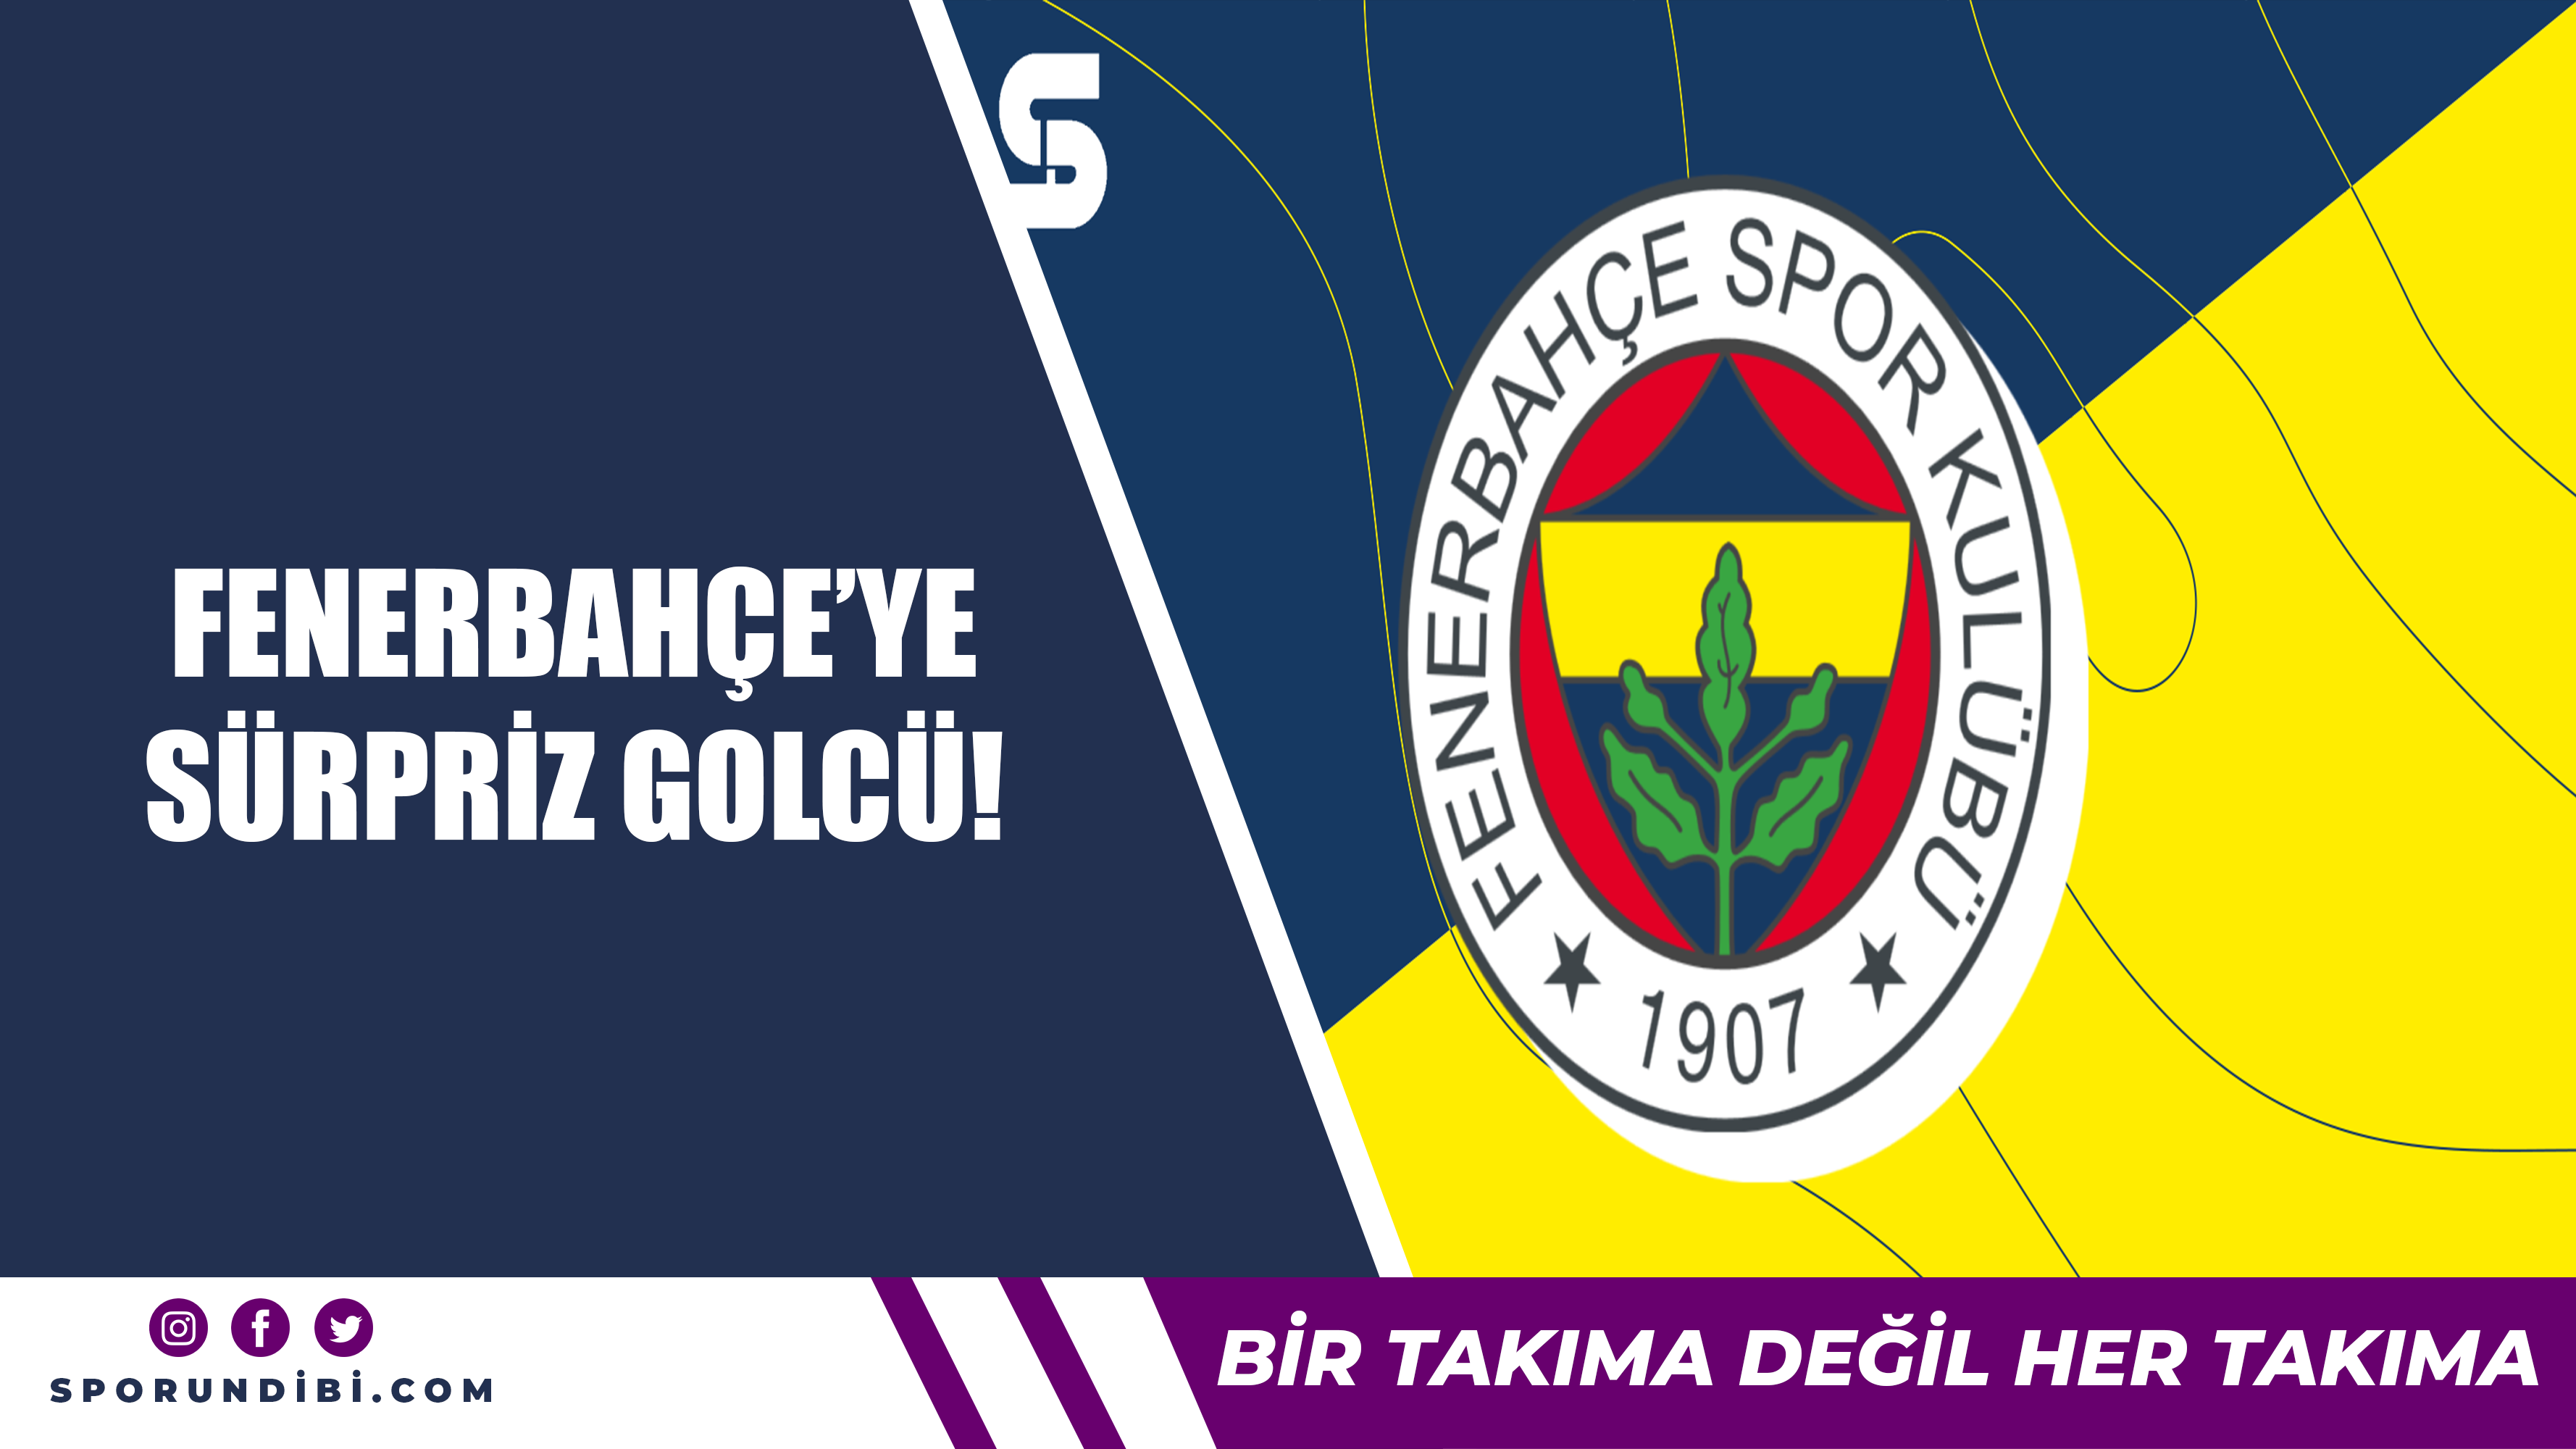 Fenerbahçe'ye sürpriz golcü!